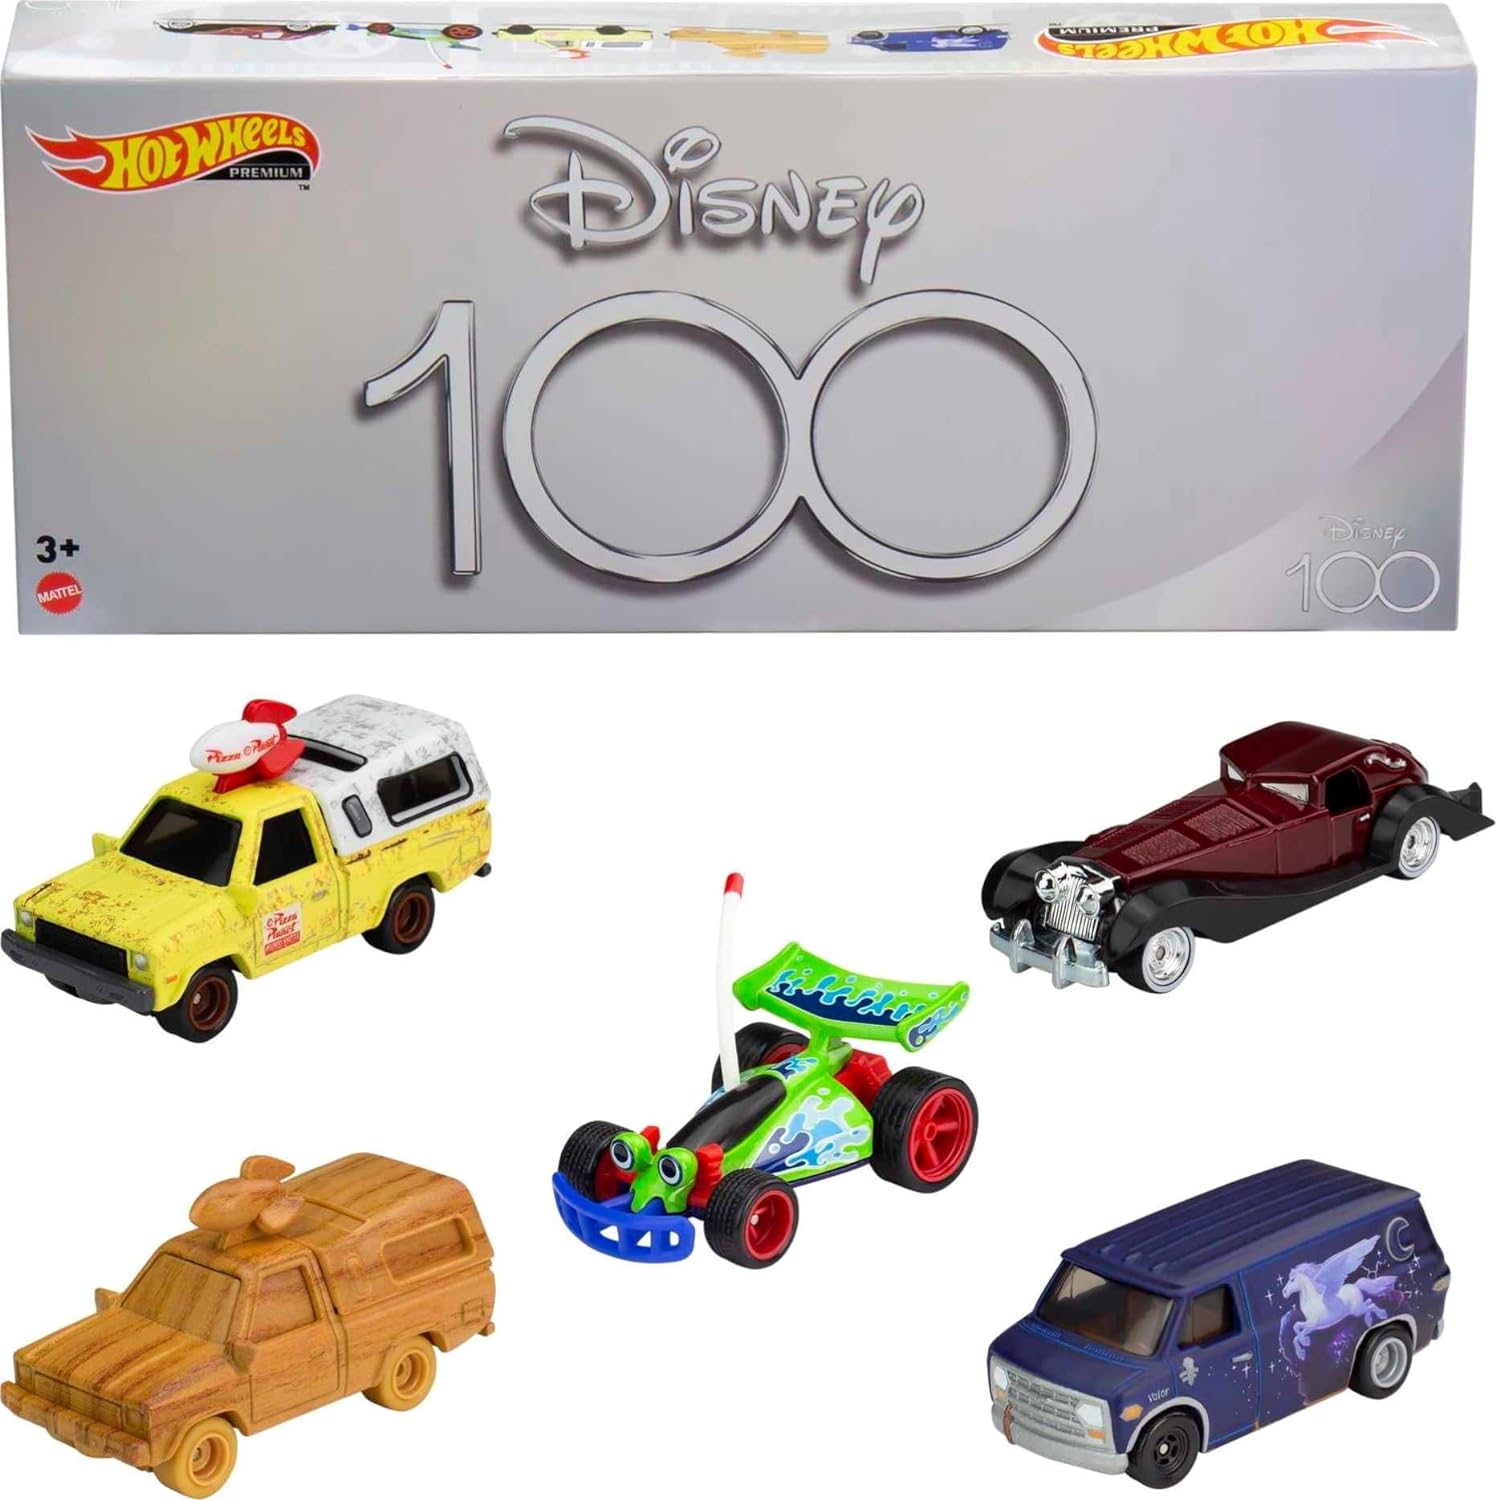 5-Pack Hot Wheels Disney 100th Anniversary Themed Car $14 + Free Shipping